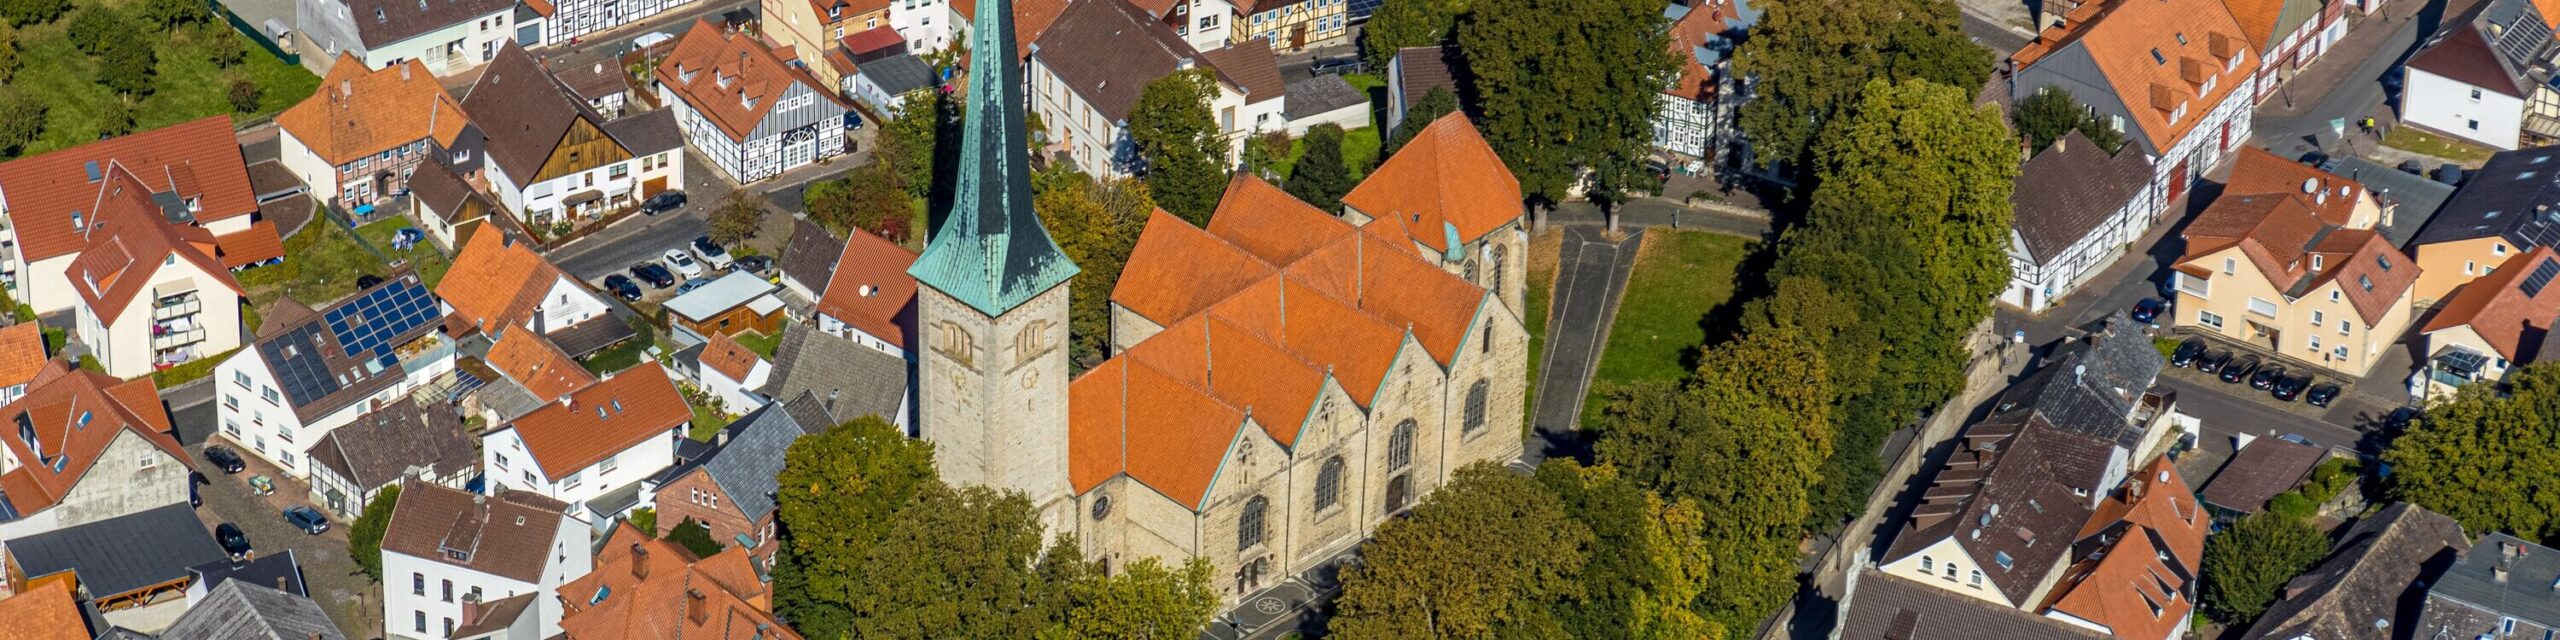 Luftbild St. Michael Brakel